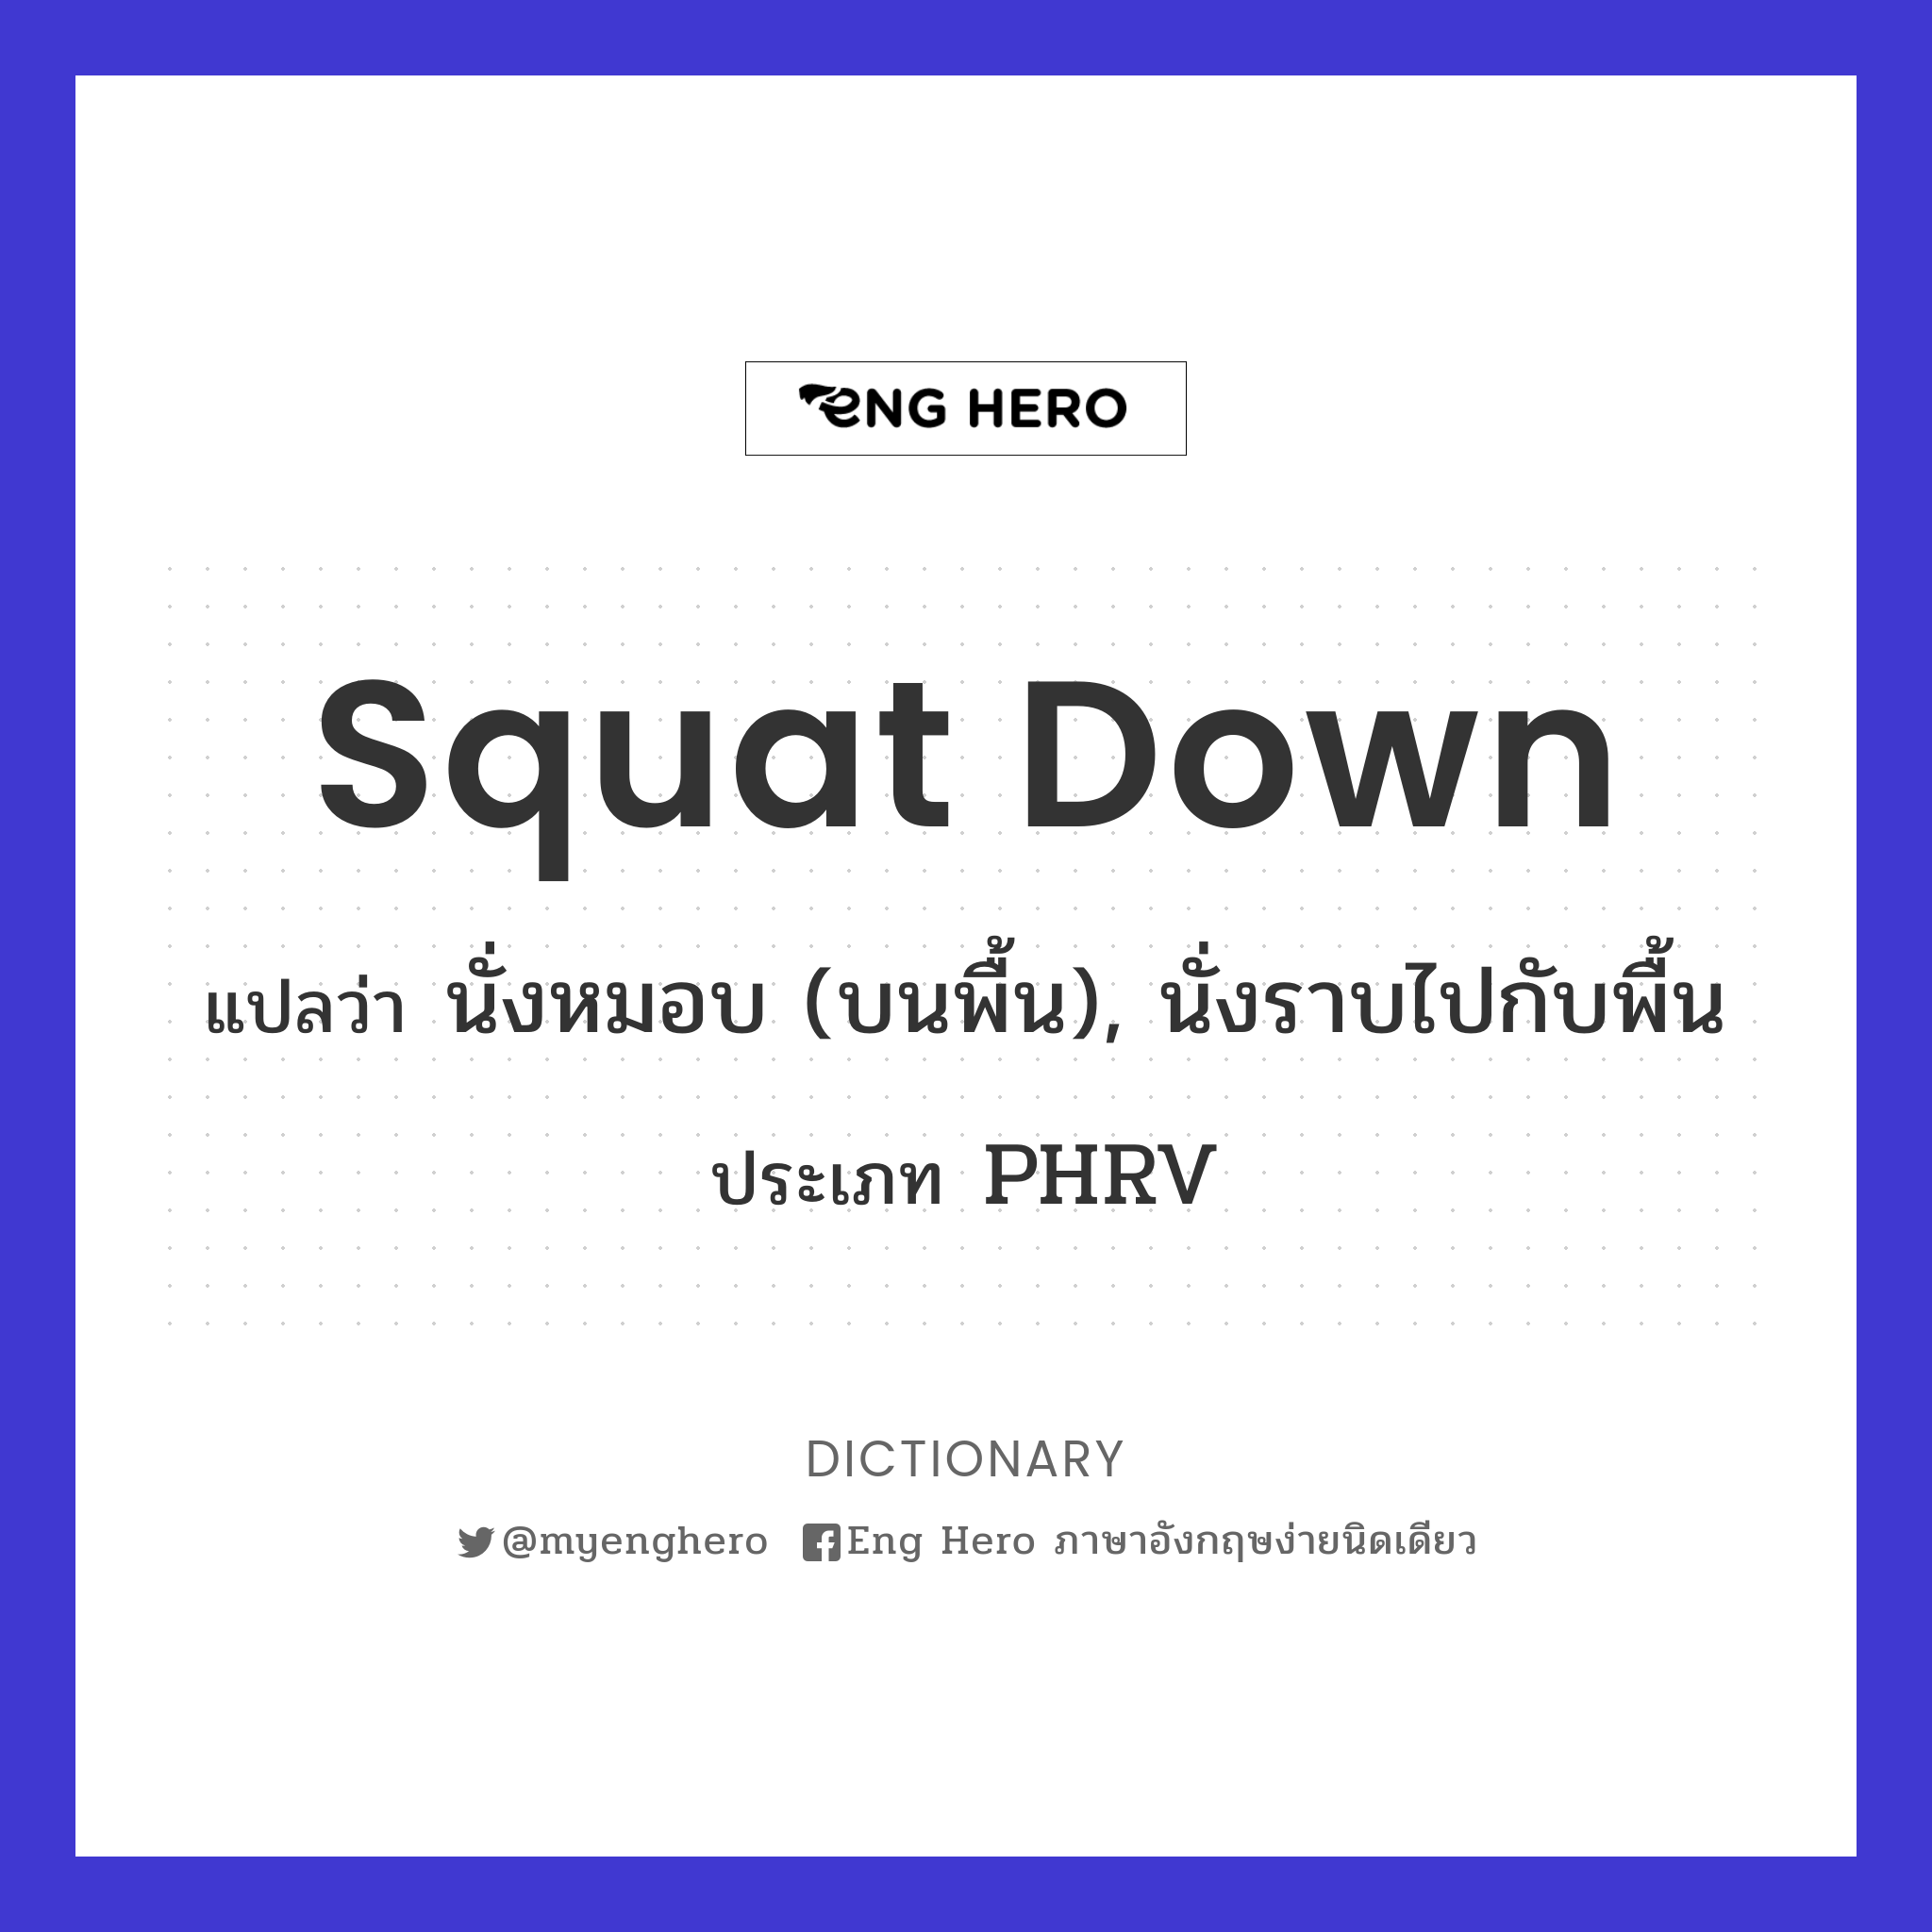 squat down